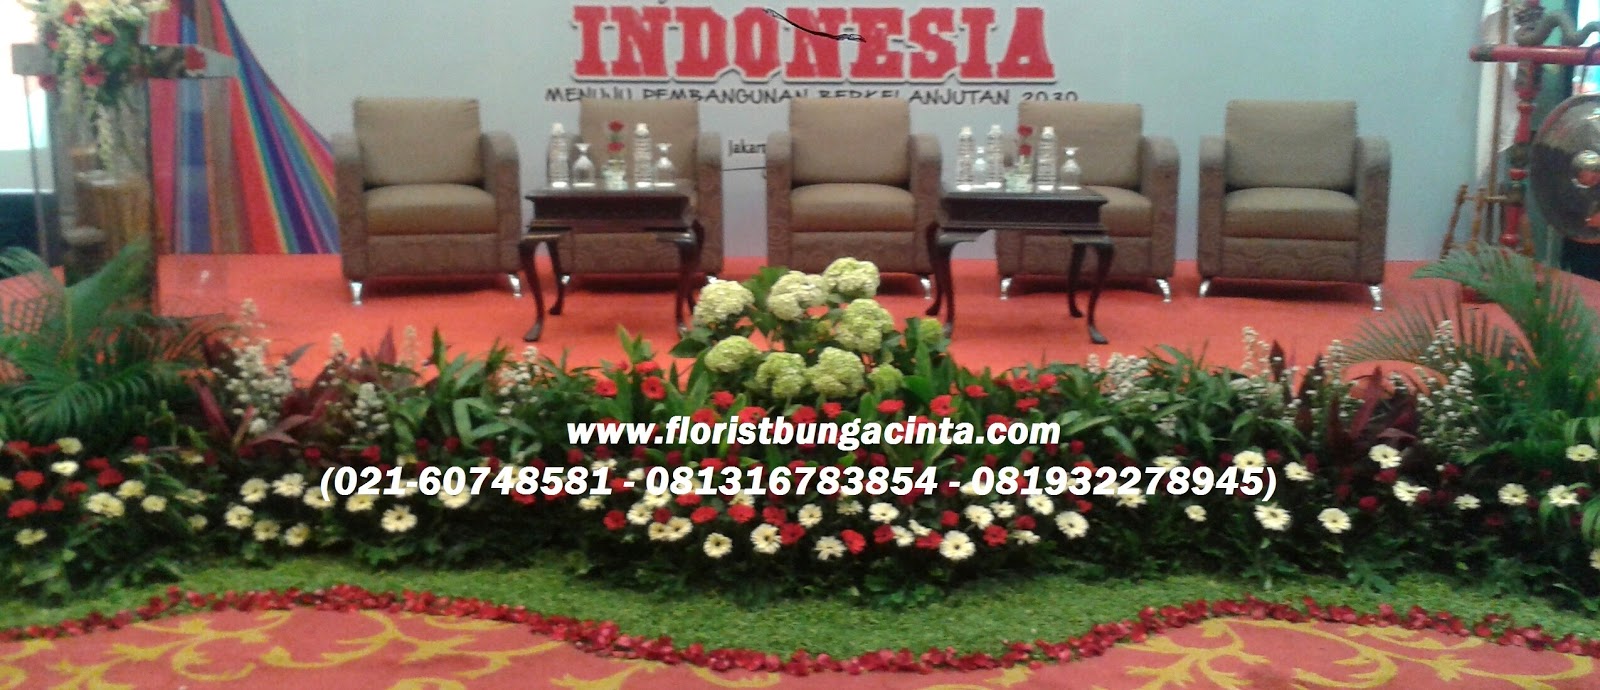 Rusty Florist Jakarta Online Flower Shop Dekorasi  Bunga  